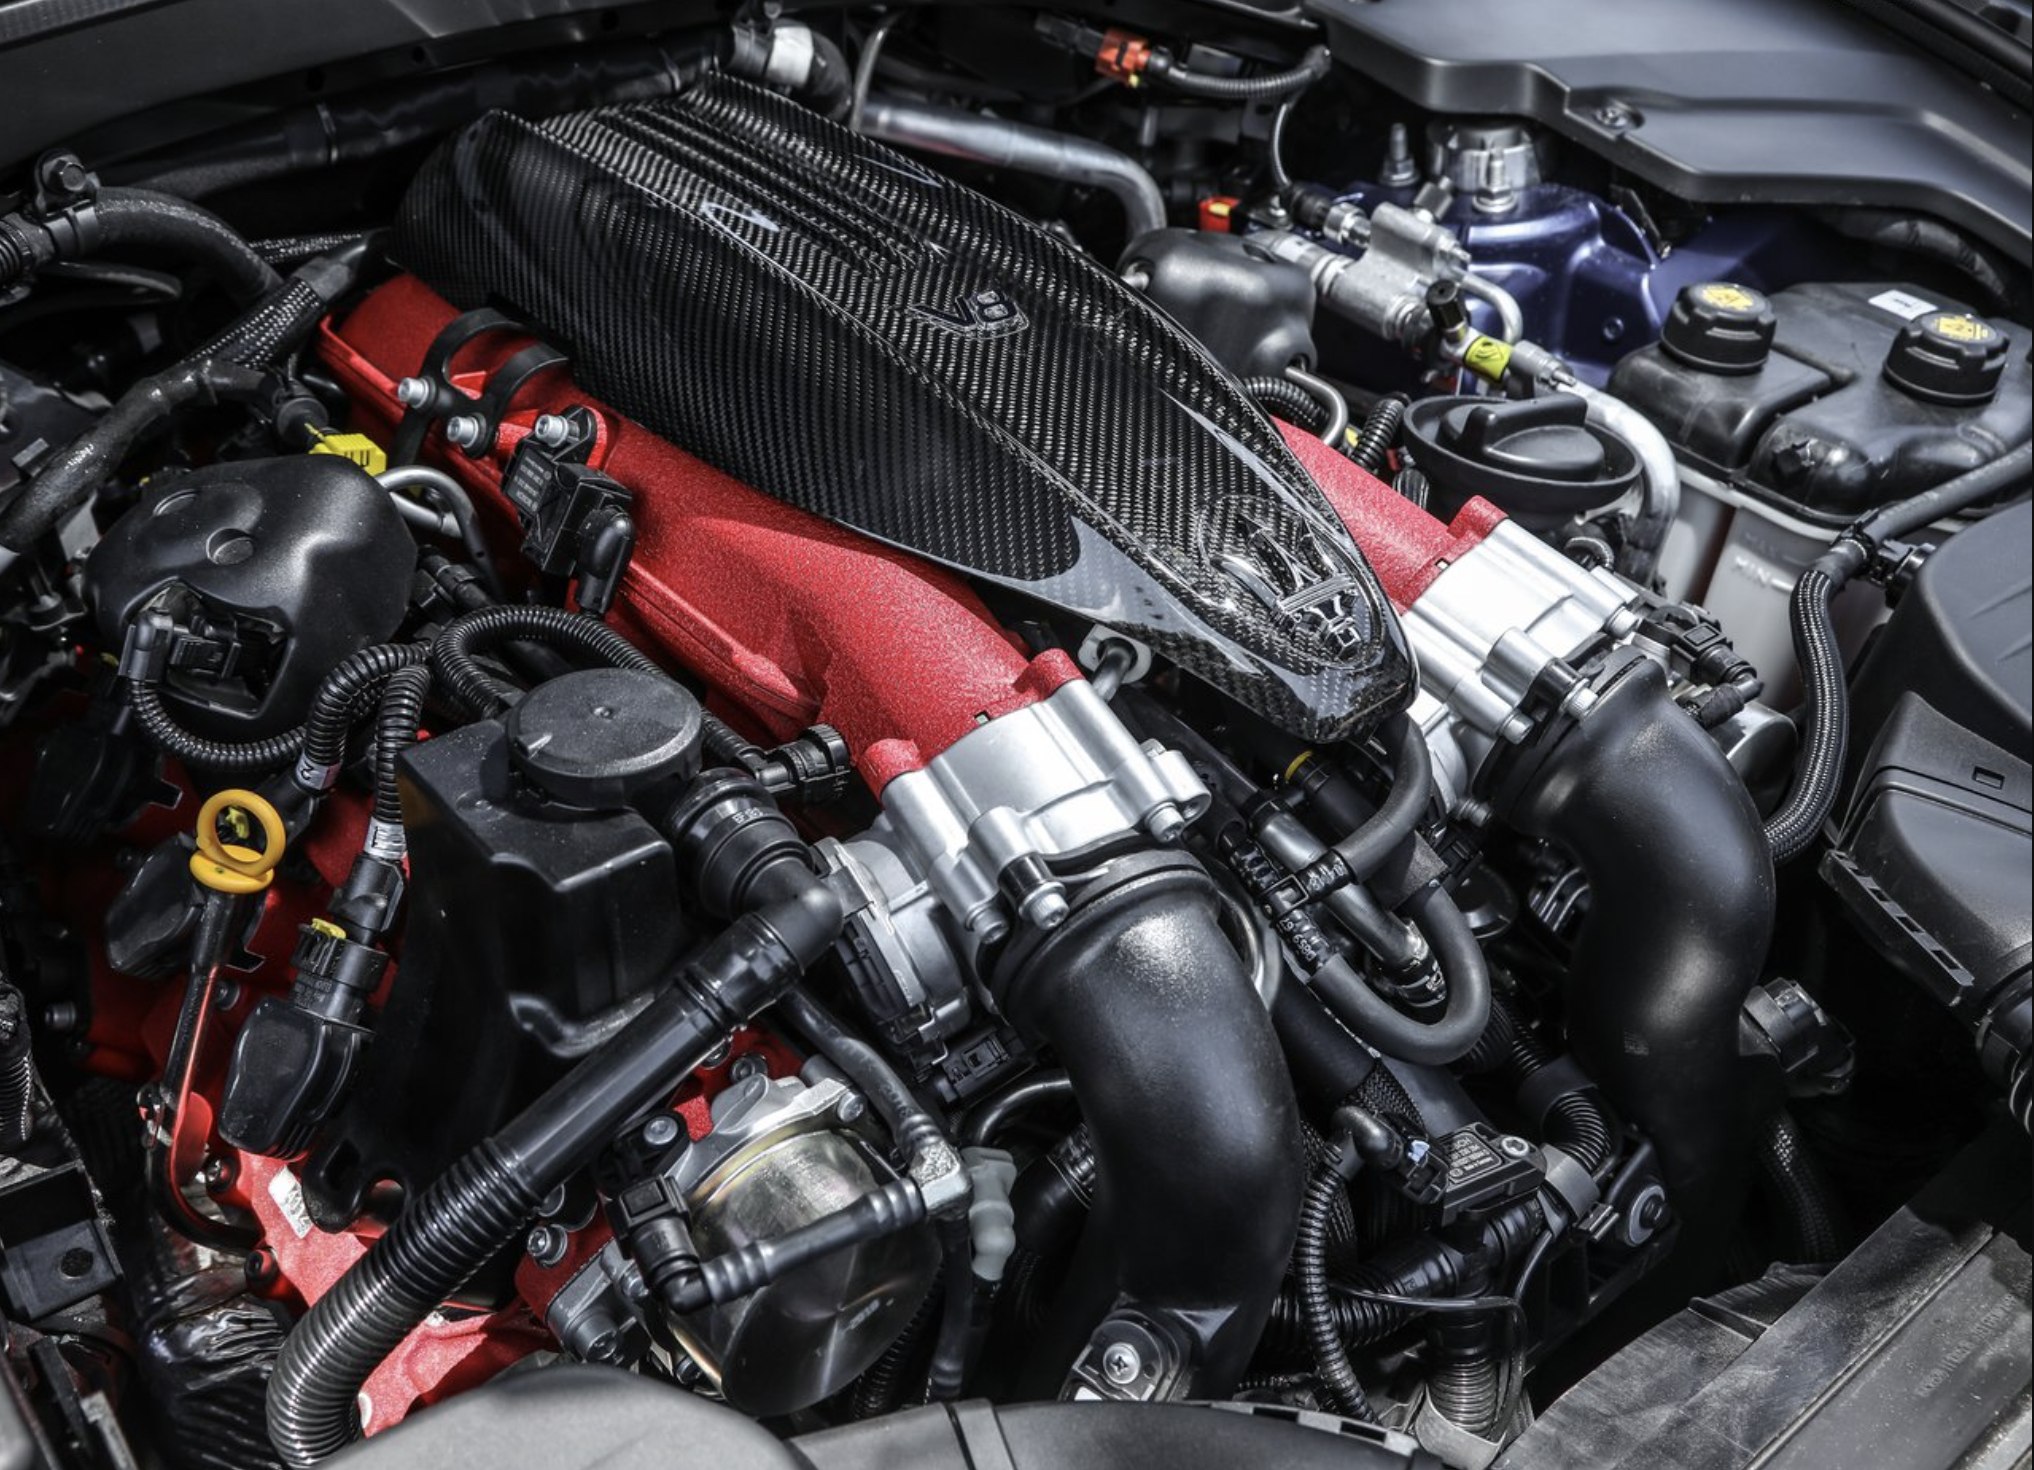 Maseratinew engine